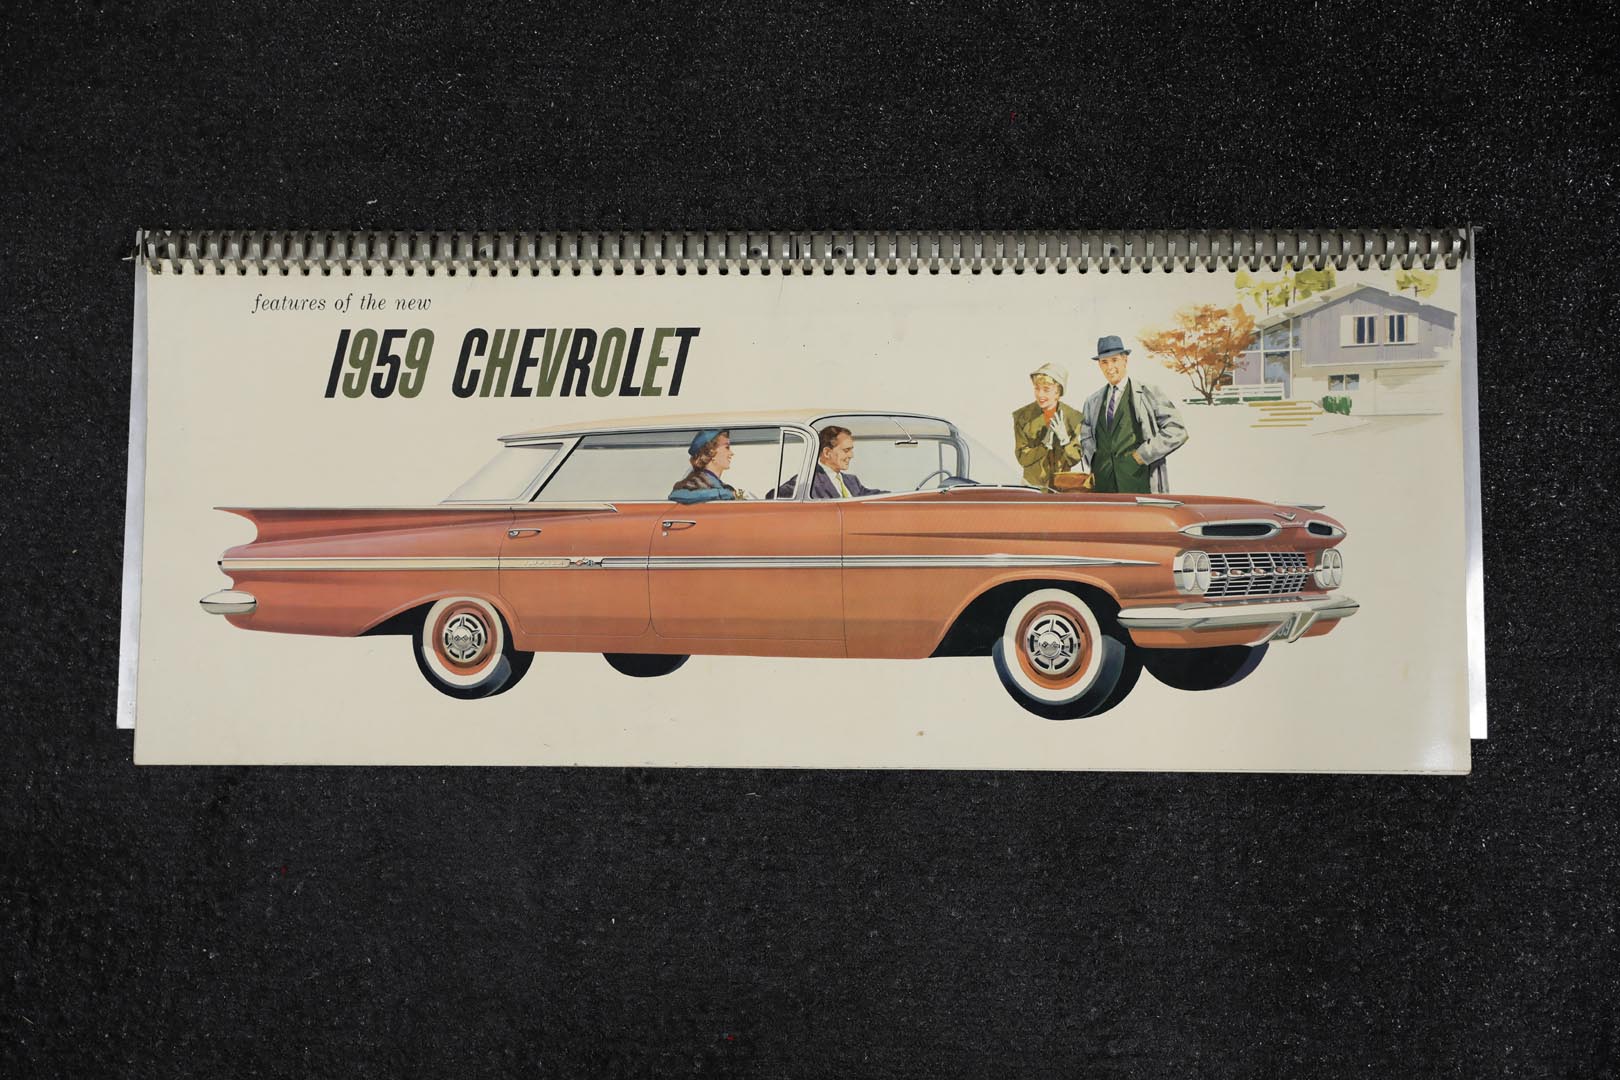  1959 Chevrolet Automobile Feat ures Showroom Display 